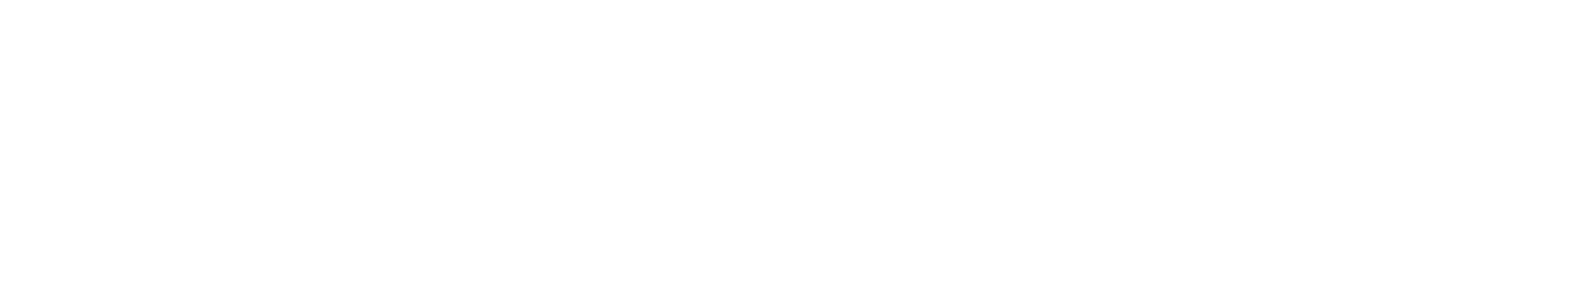 Discord logo large for dark backgrounds (transparent PNG)